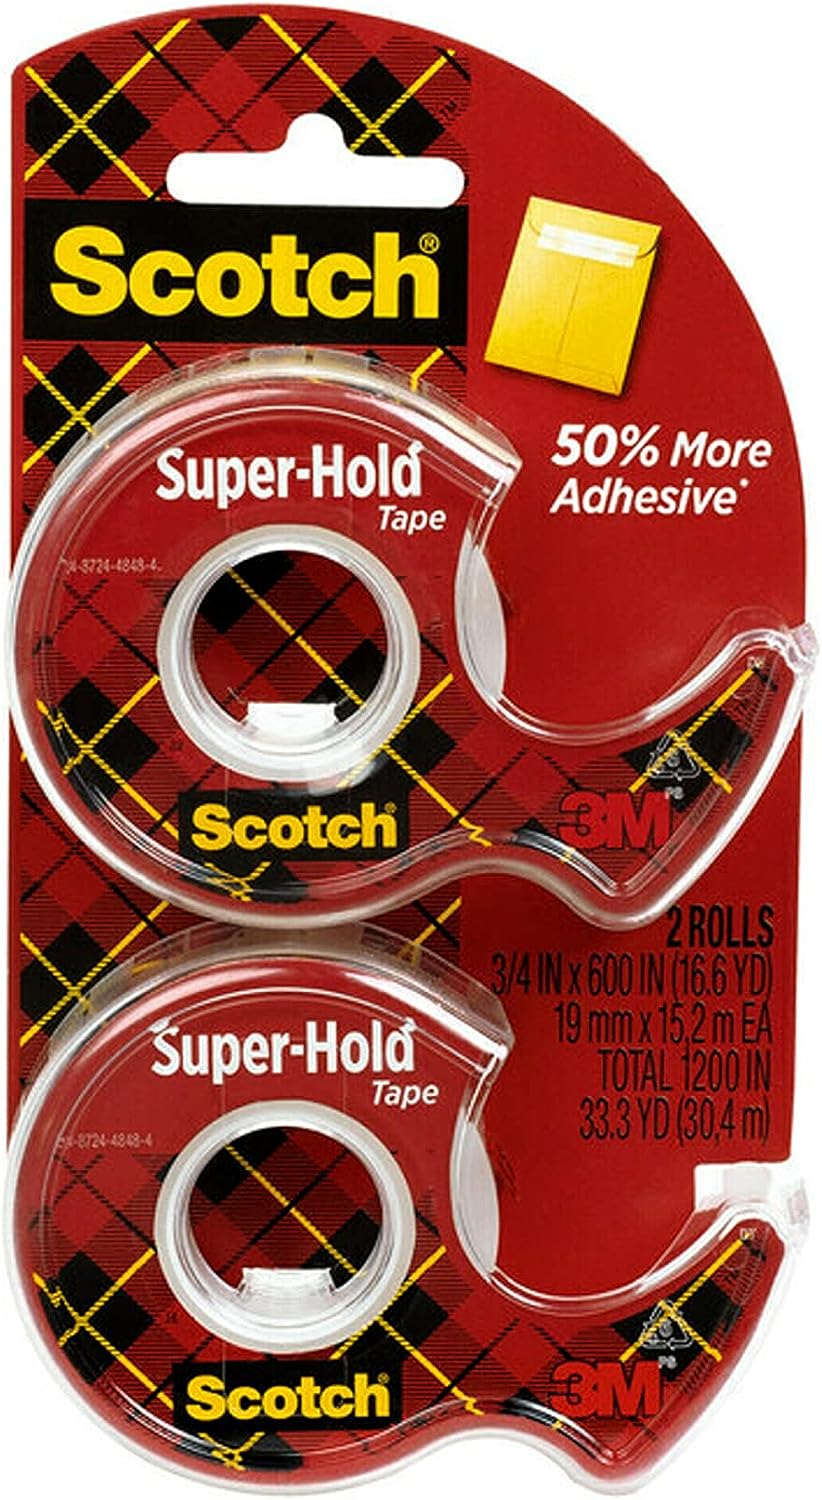 Scotch Super-Hold Tape, 2 Rolls, Transparent Finish, [...]